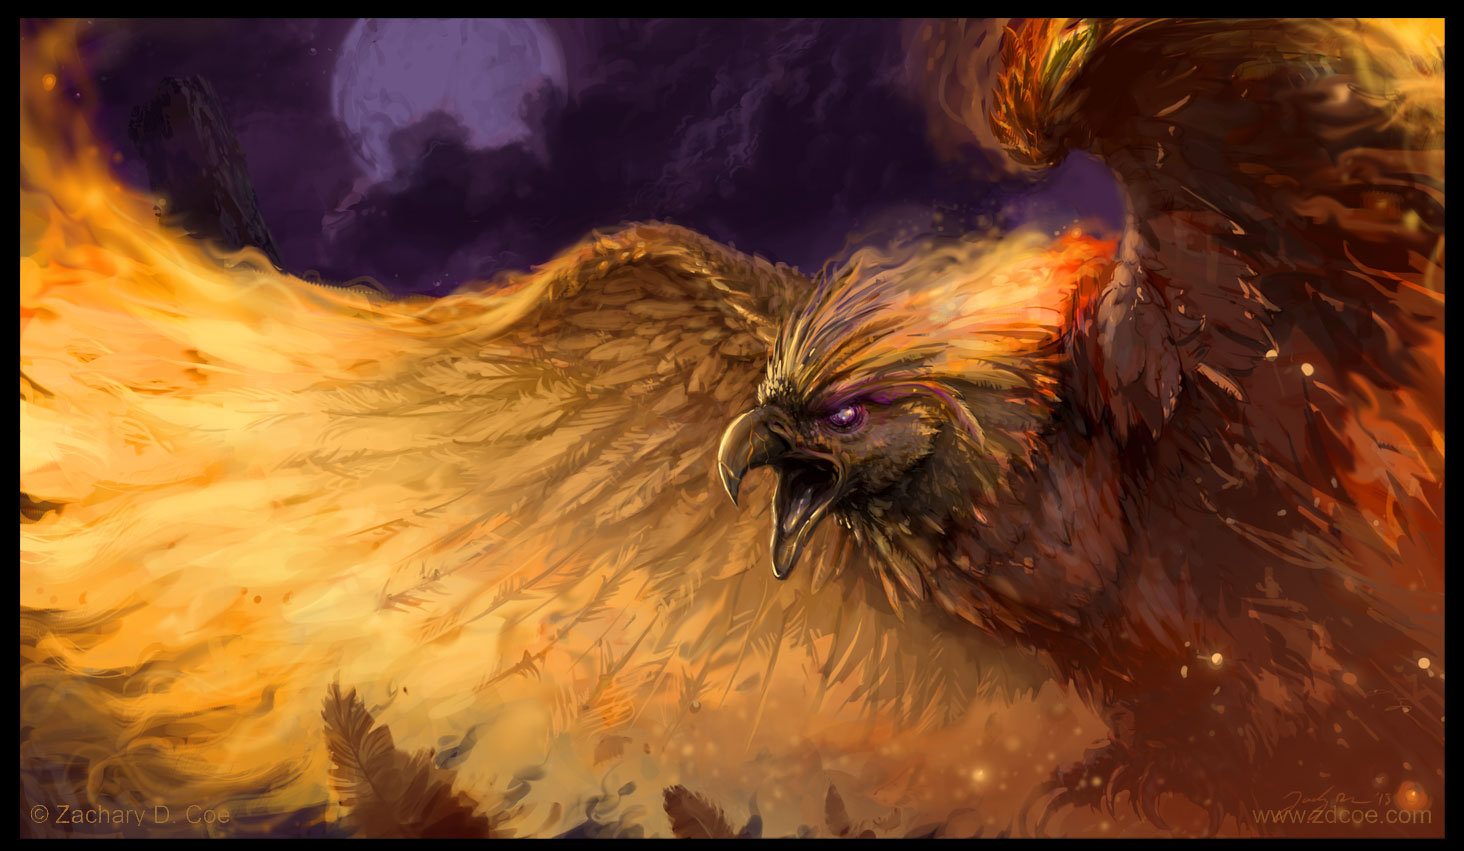 The Phoenix by Zachary D. Coe